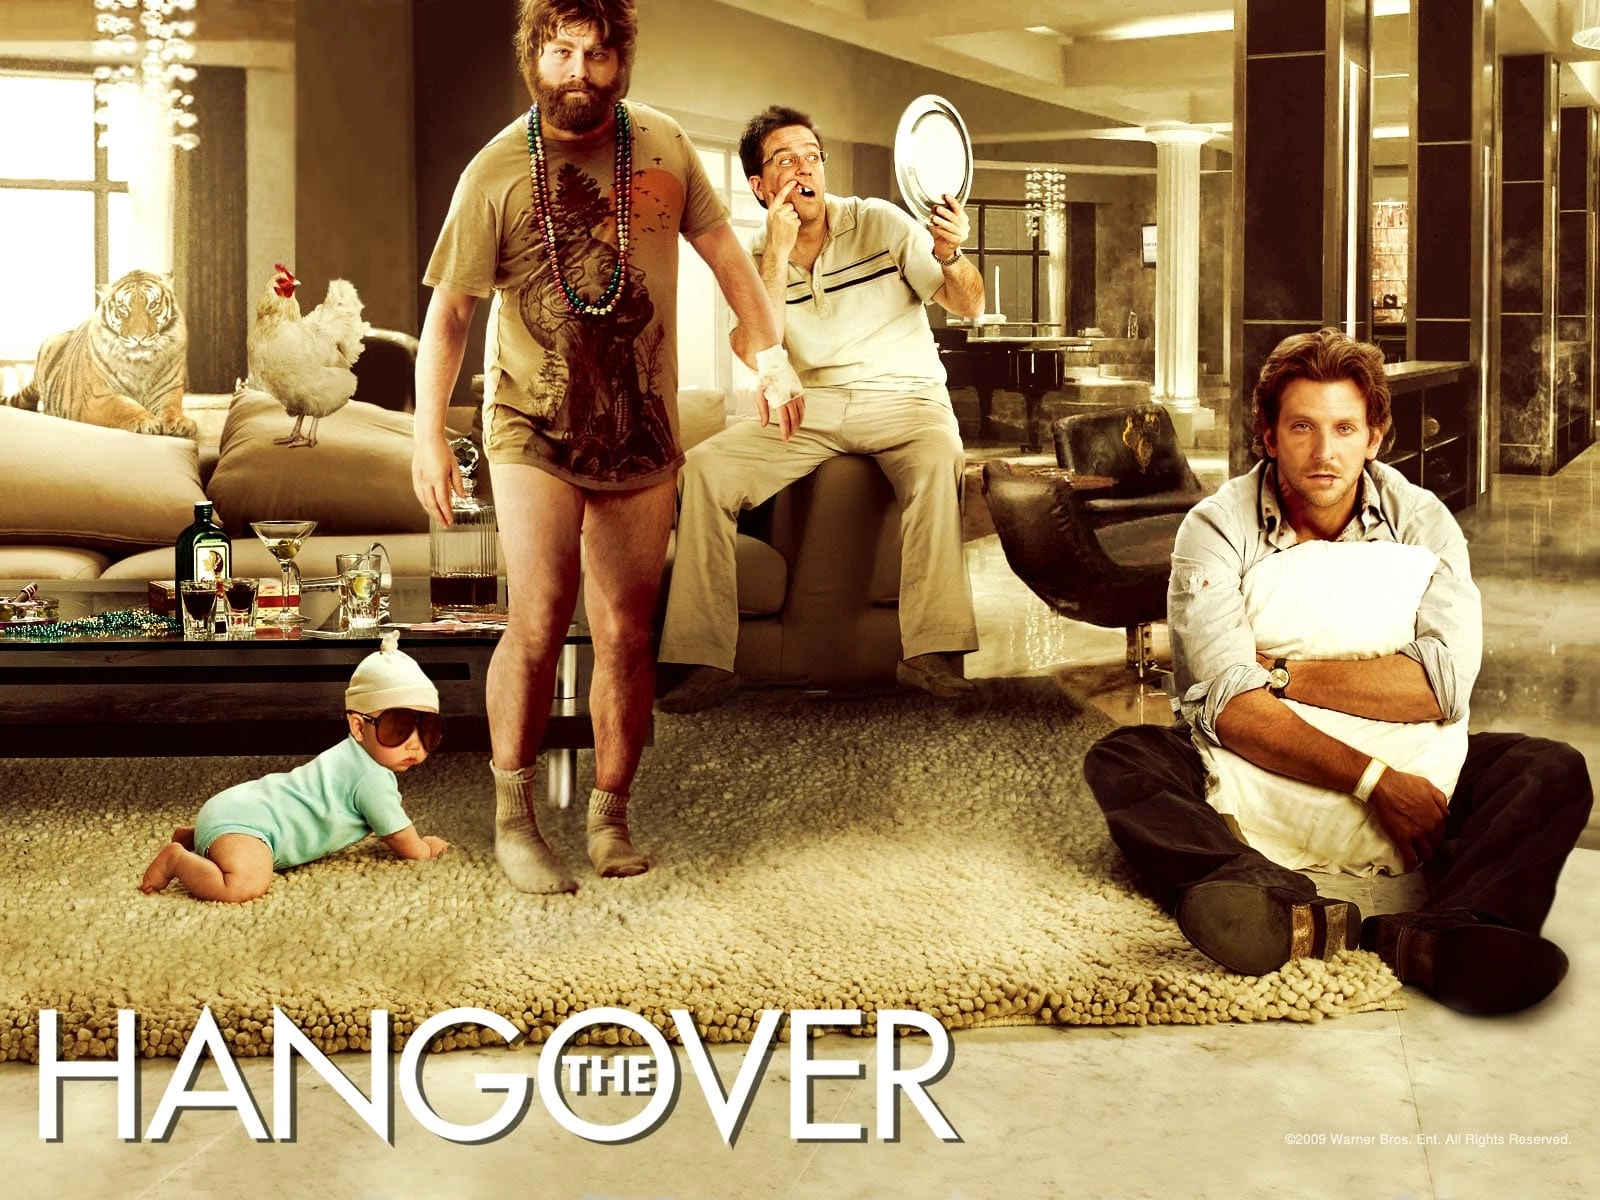 The Hangover (2009) - movies like American Pie